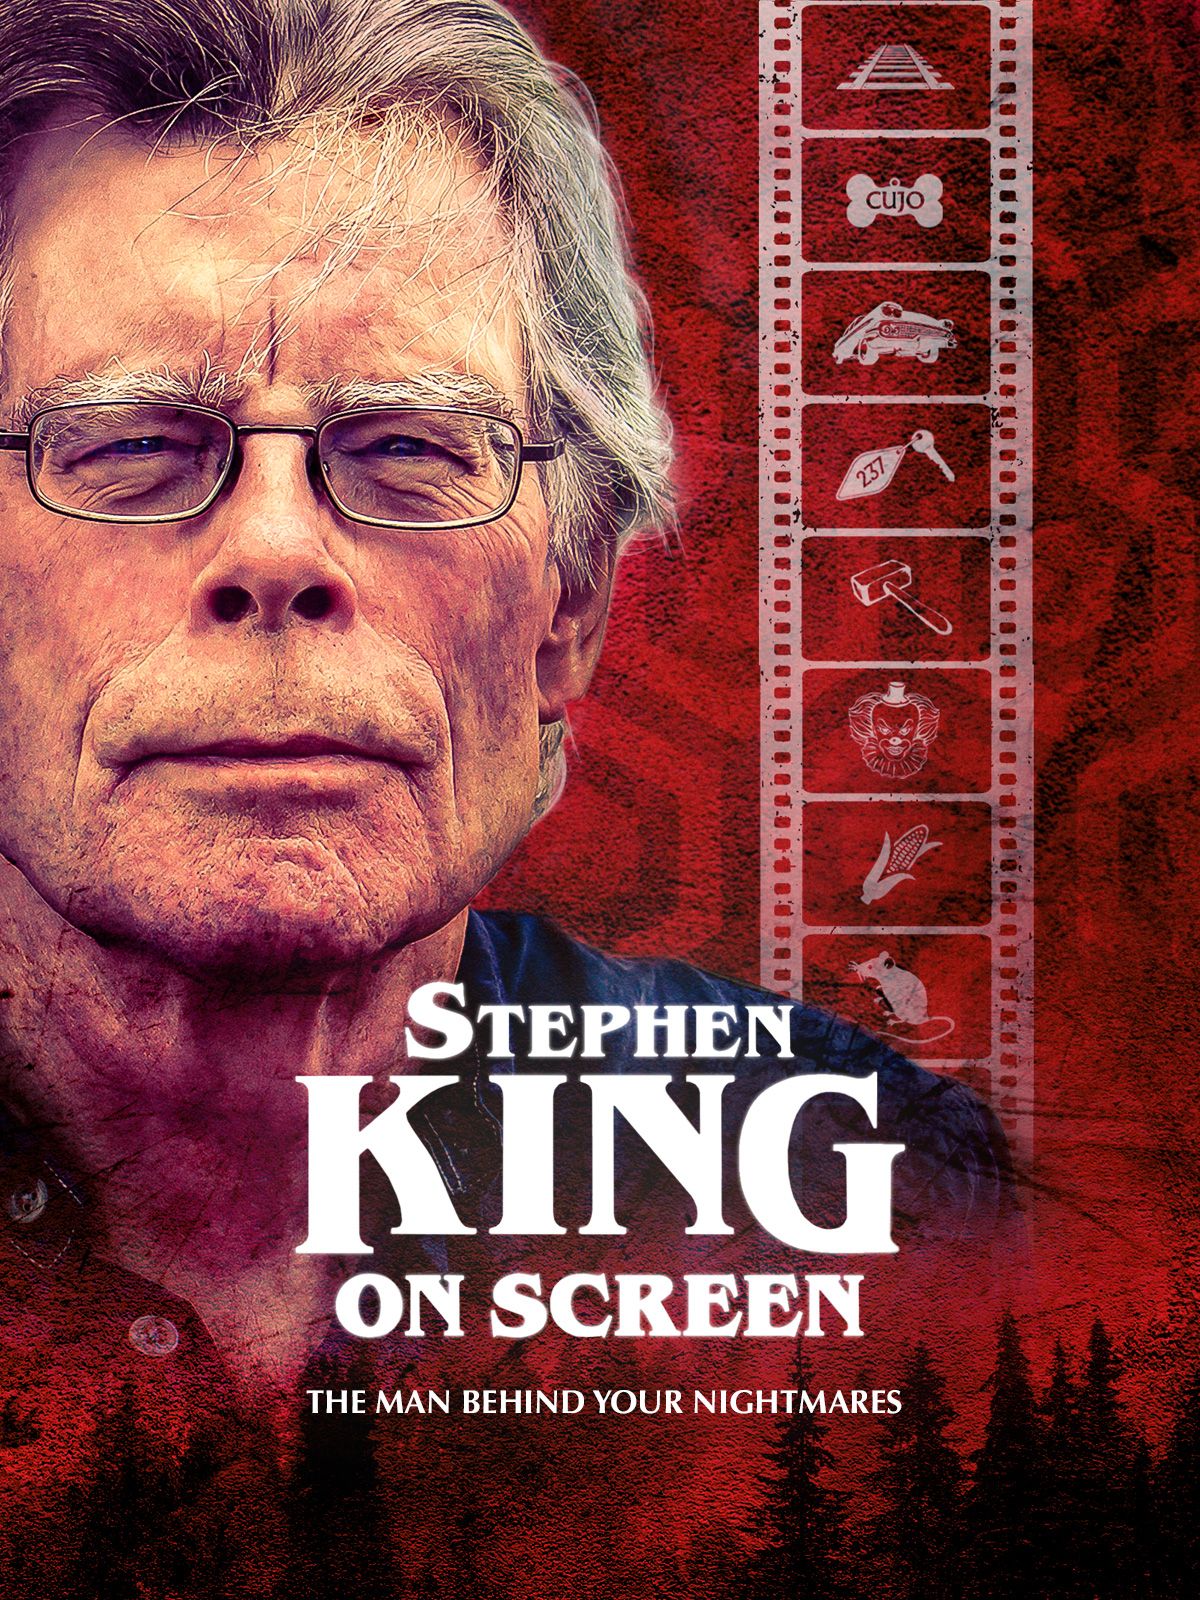 Stephen King on Screen UK Poster Artwork (Signature Entertainment)_resize